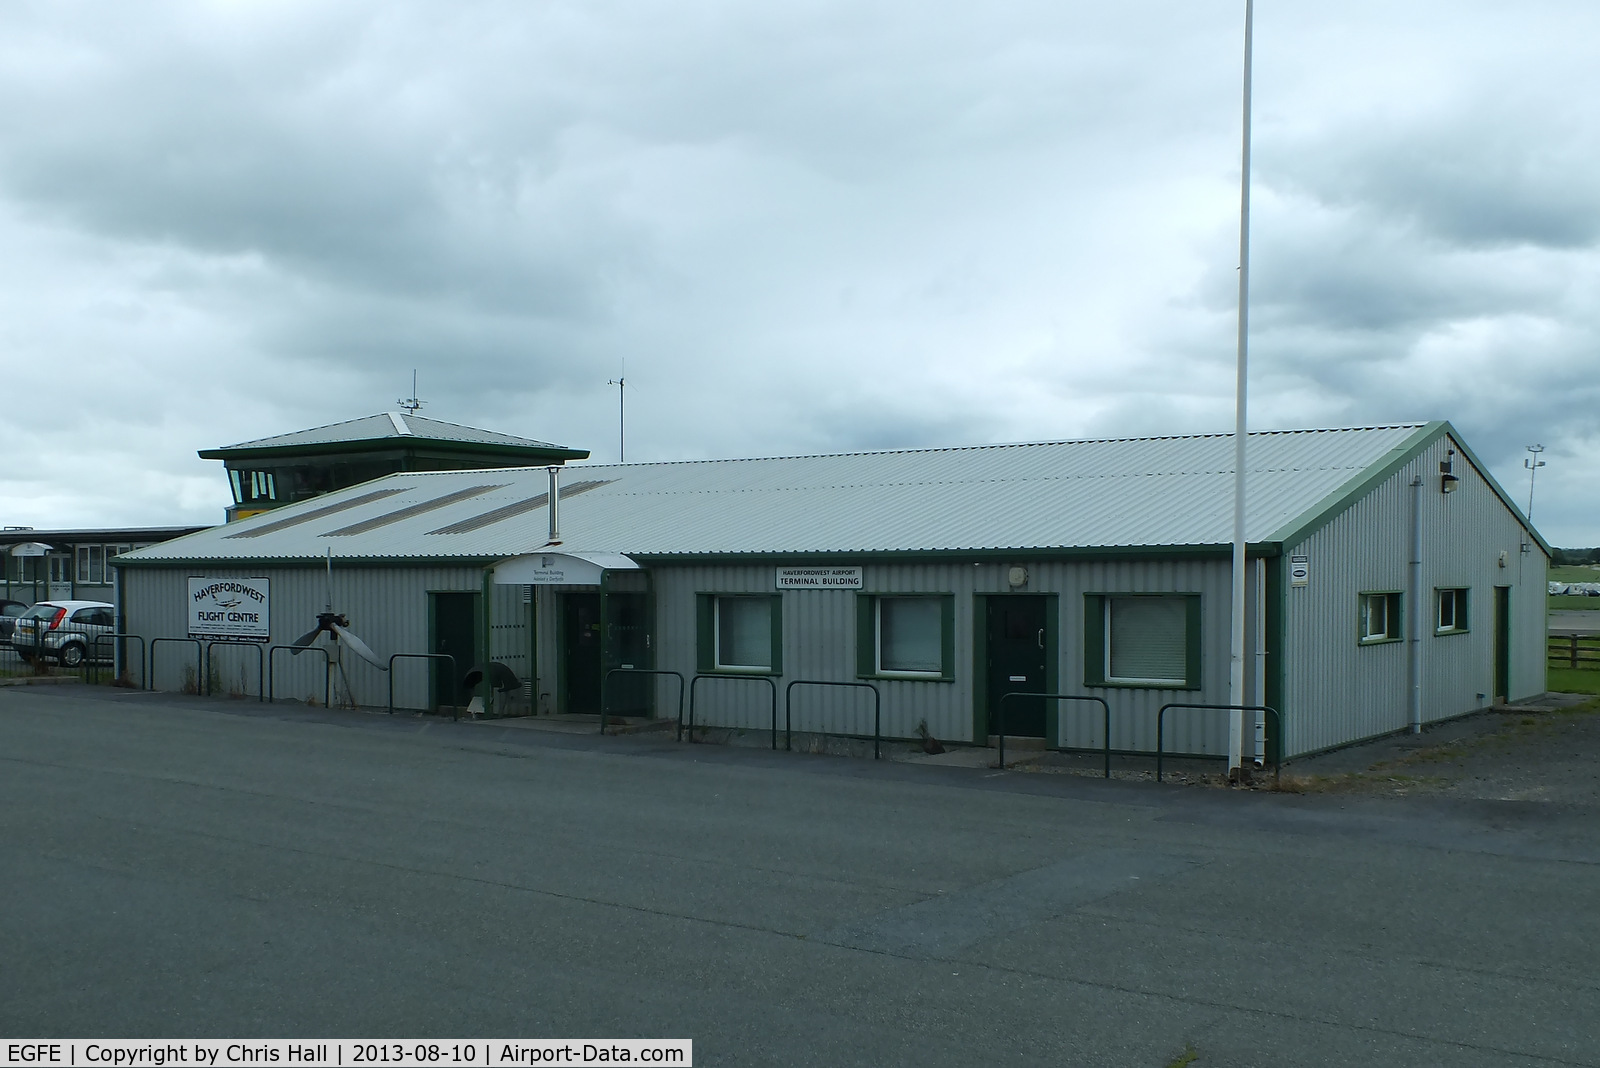 Haverfordwest Aerodrome Airport, Haverfordwest, Wales United Kingdom (EGFE) - Haverfordwest Airport Terminal Building